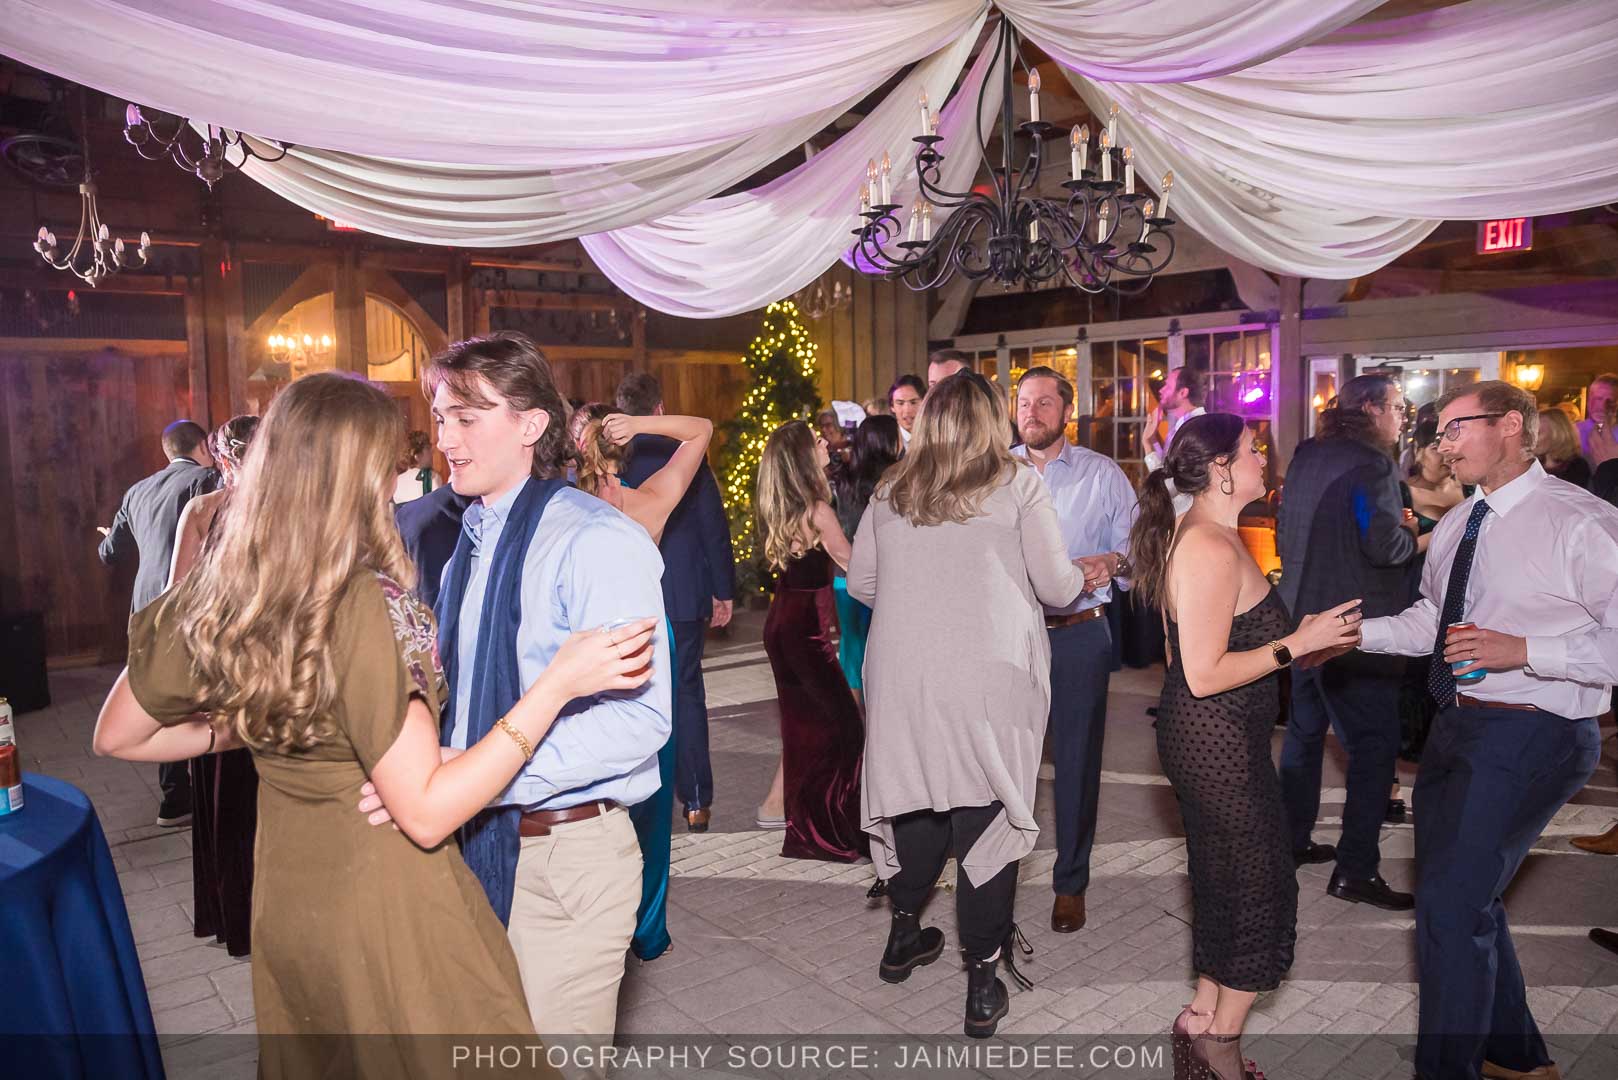 Rocky's Lake Estate Wedding Venue - reception - wedding guest dancing inside pavilion with ceiling drapes